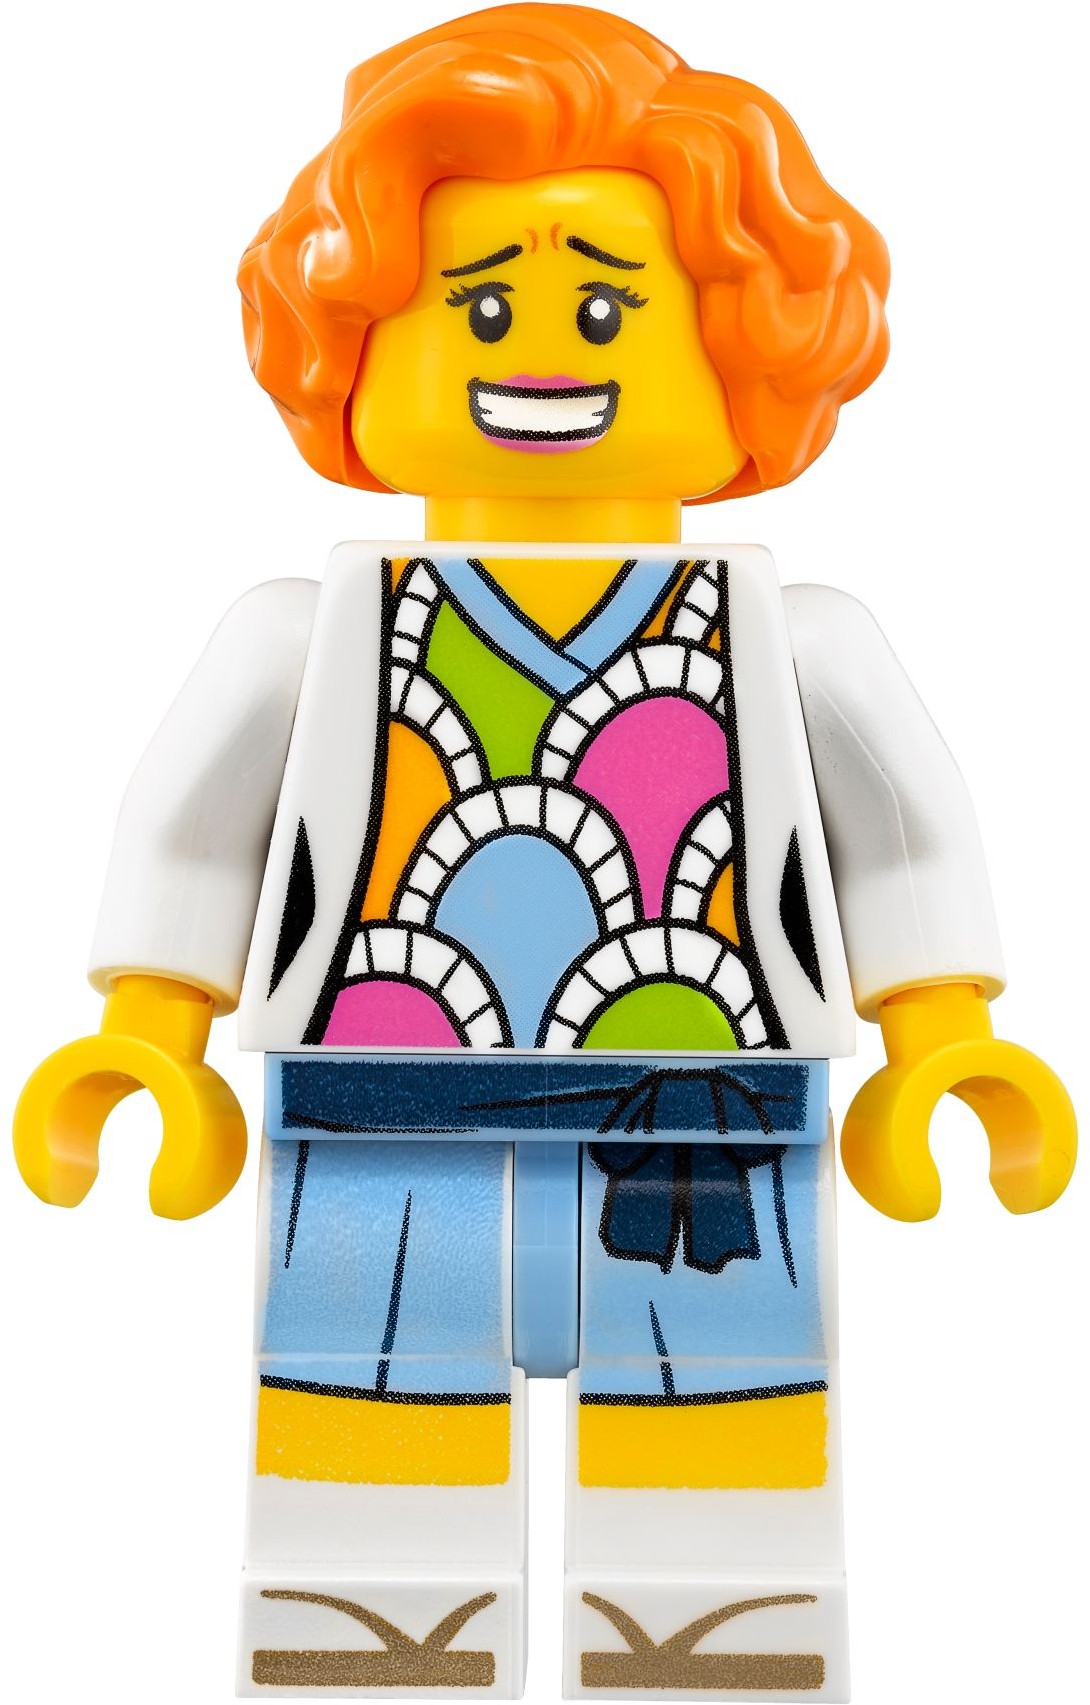 70615 Fire Mech - Lego Ninjago set for sale best price